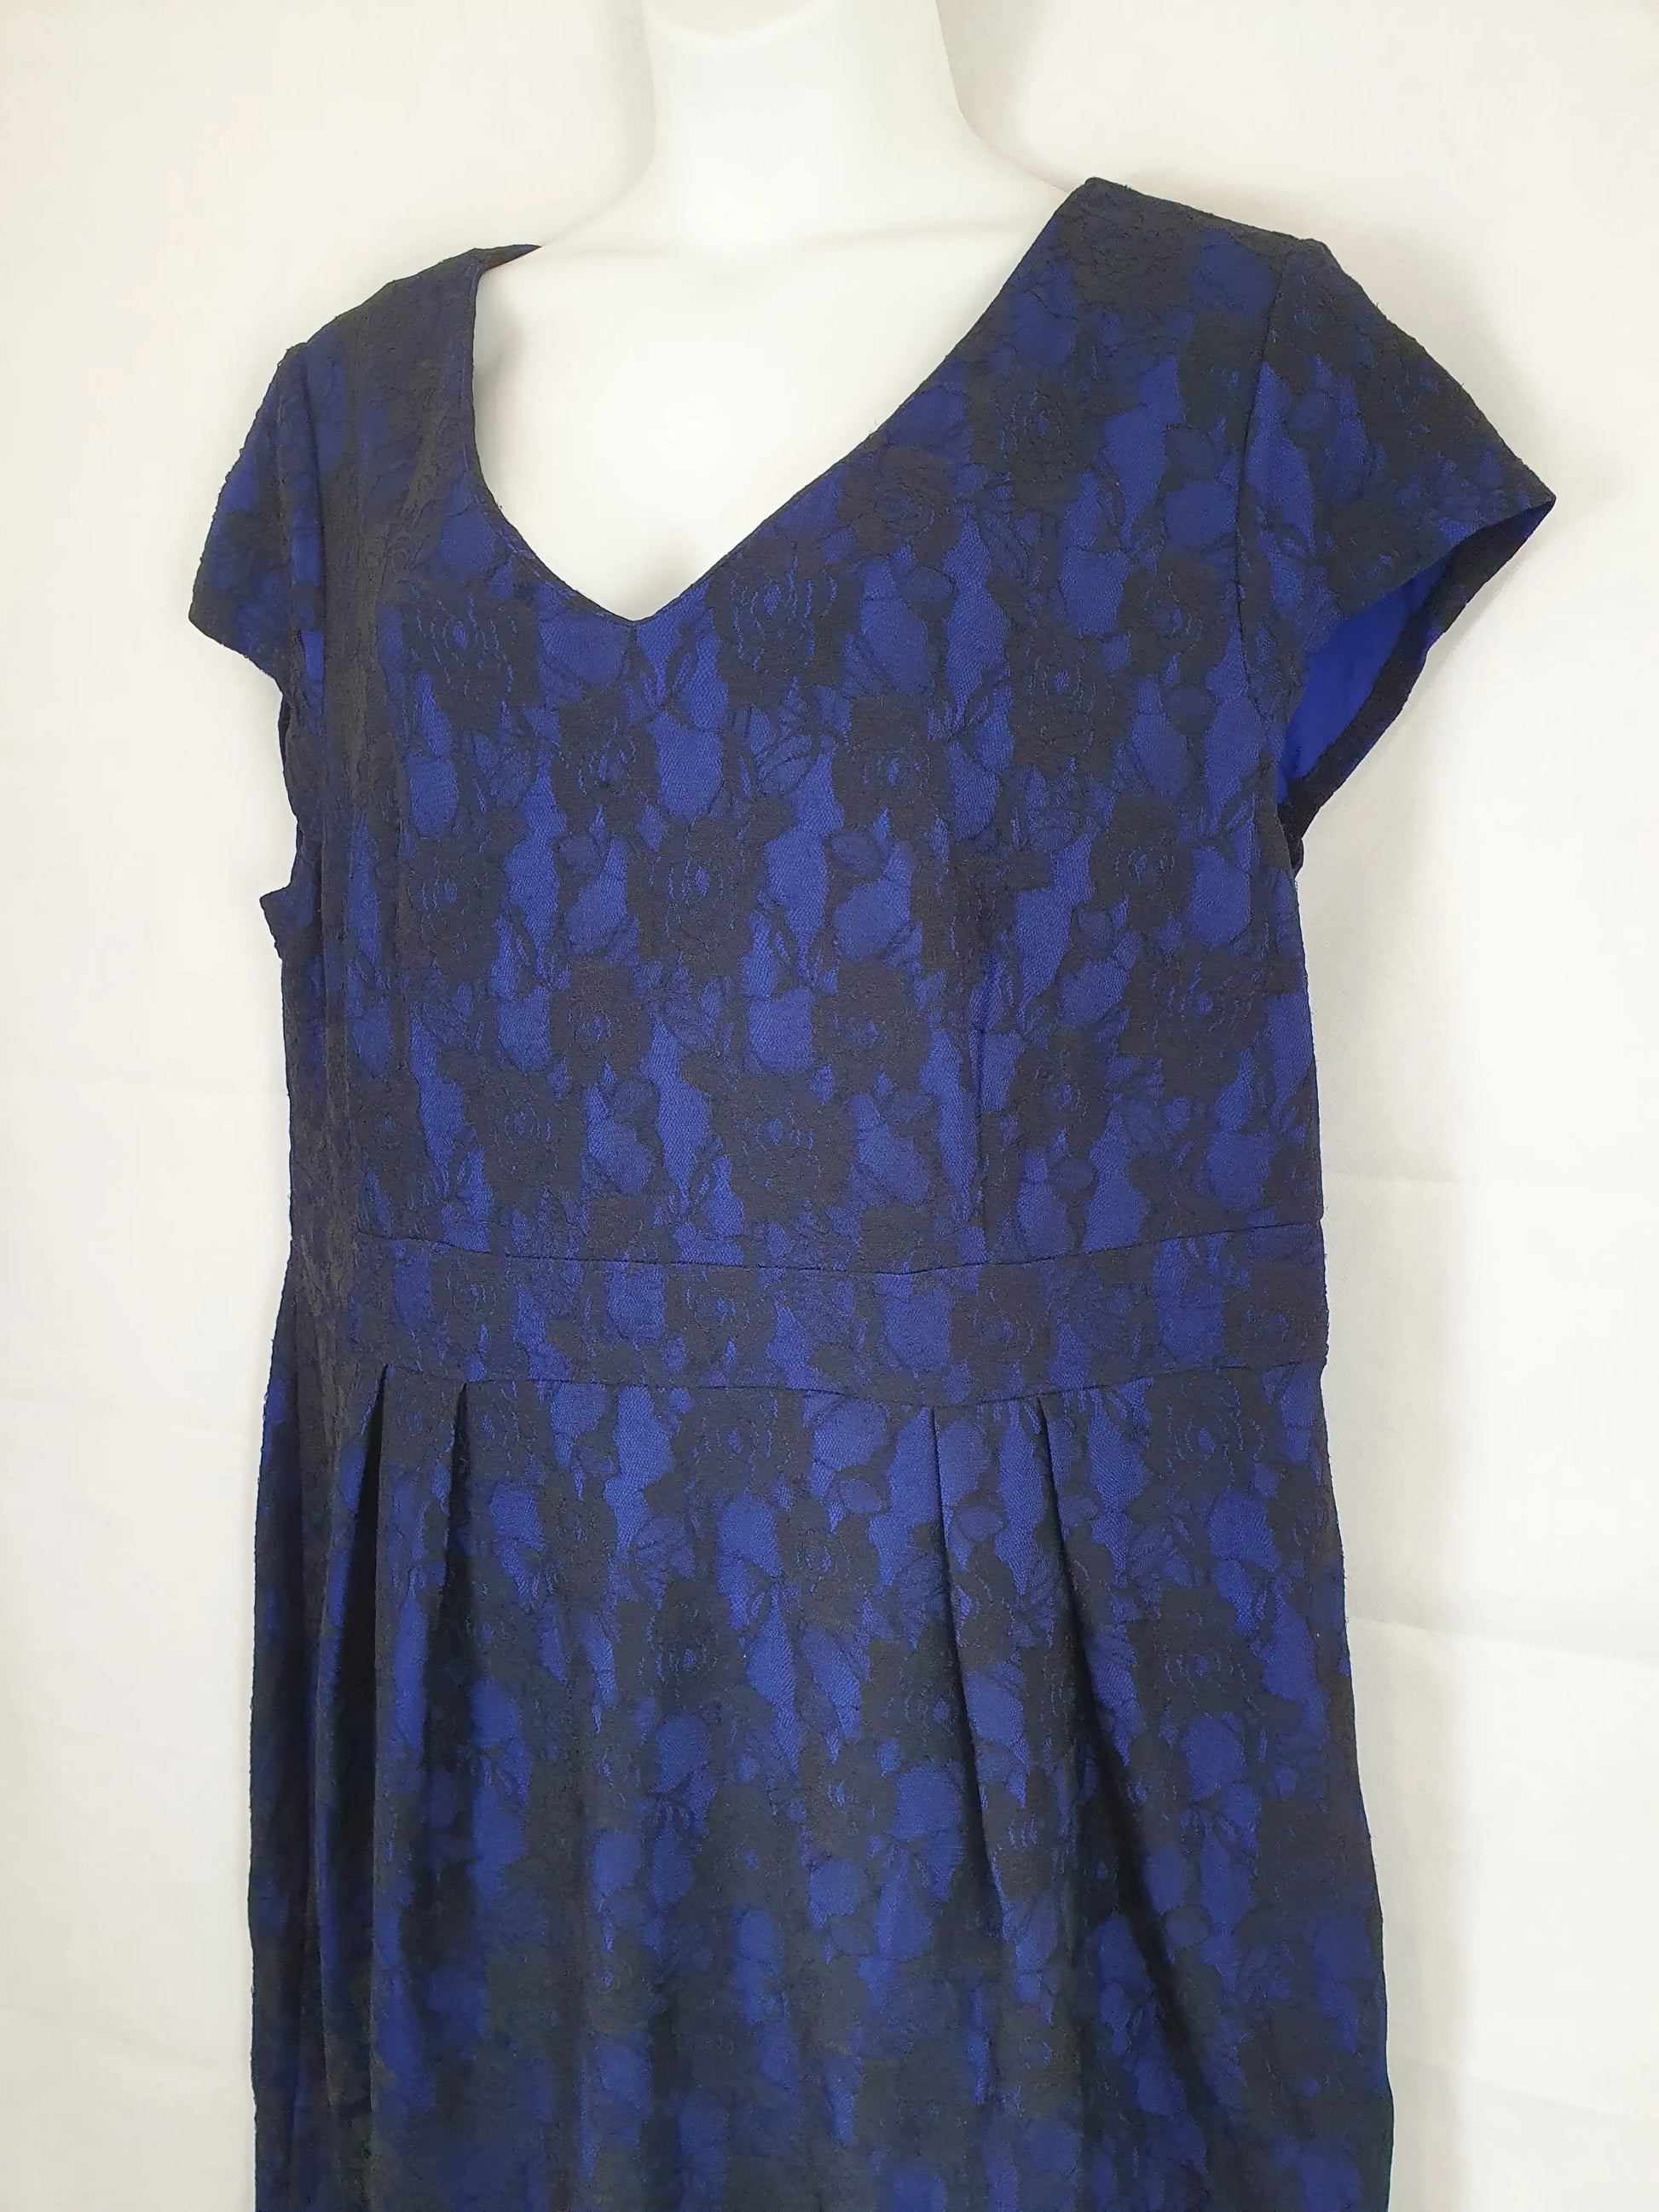 Lula Black & Purple Lace Evening Mini Dress Size 20 Plus by SwapUp-Online Second Hand Store-Online Thrift Store